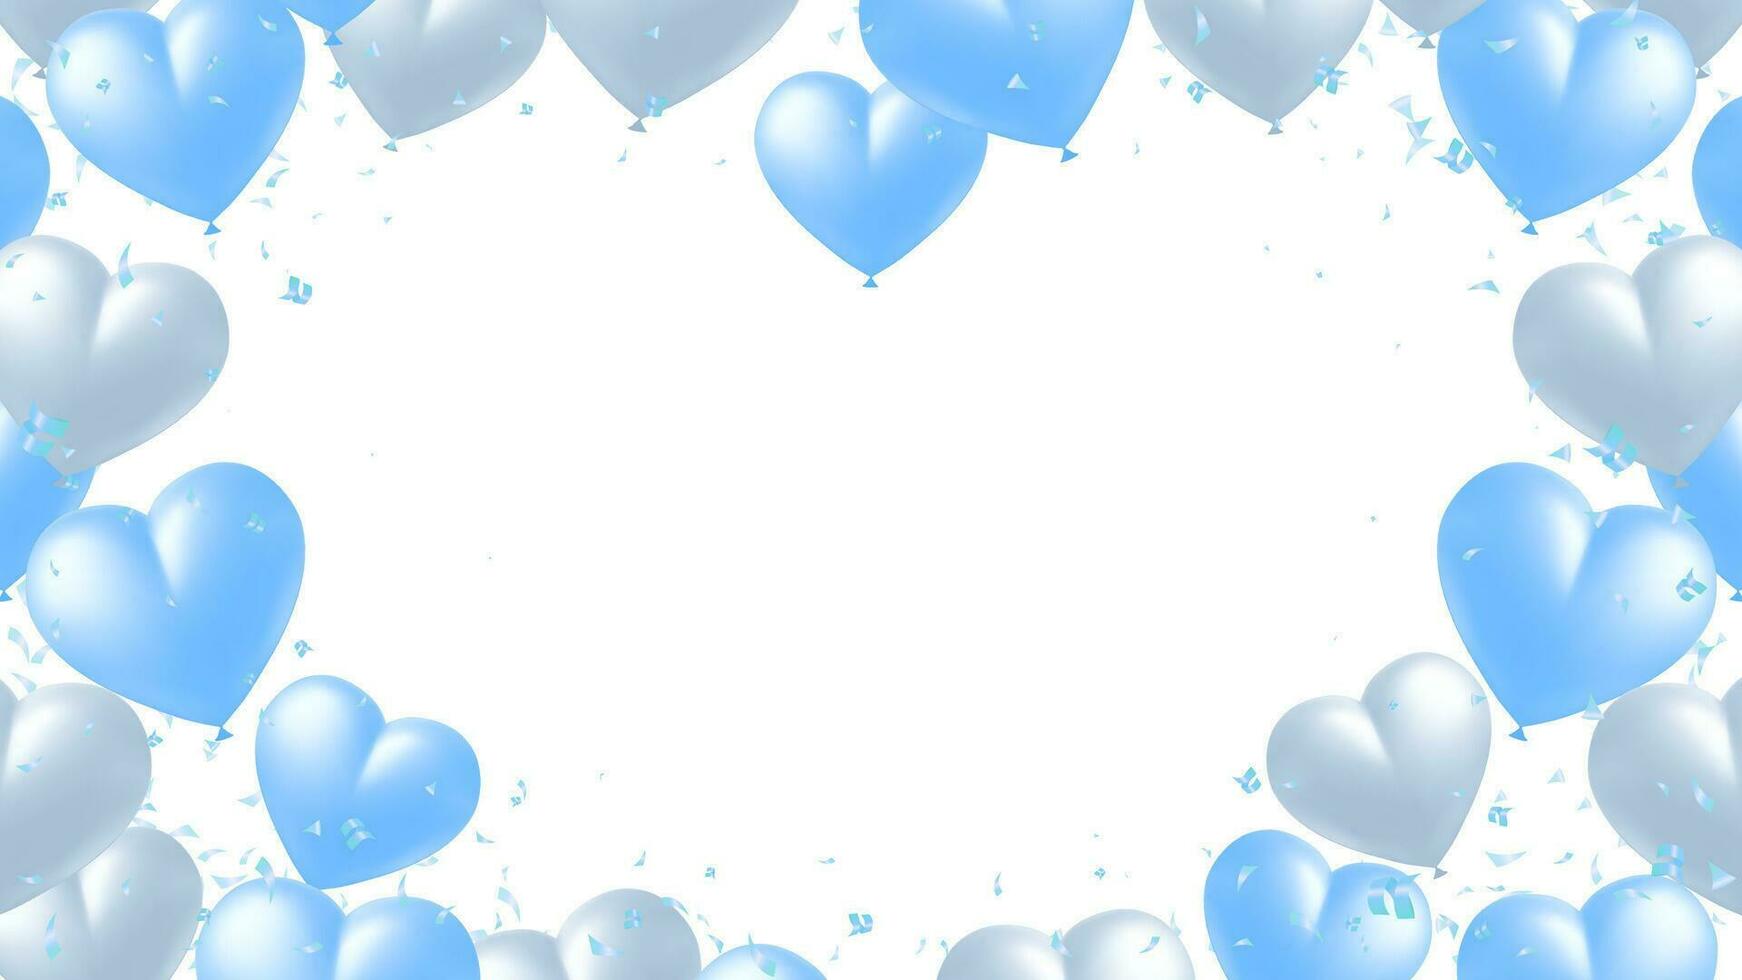 Helium Blau Ballon und Konfetti mit Dekor Rahmen Party Urlaub, Karneval, Festival, Geburtstag. Vektor Illustration